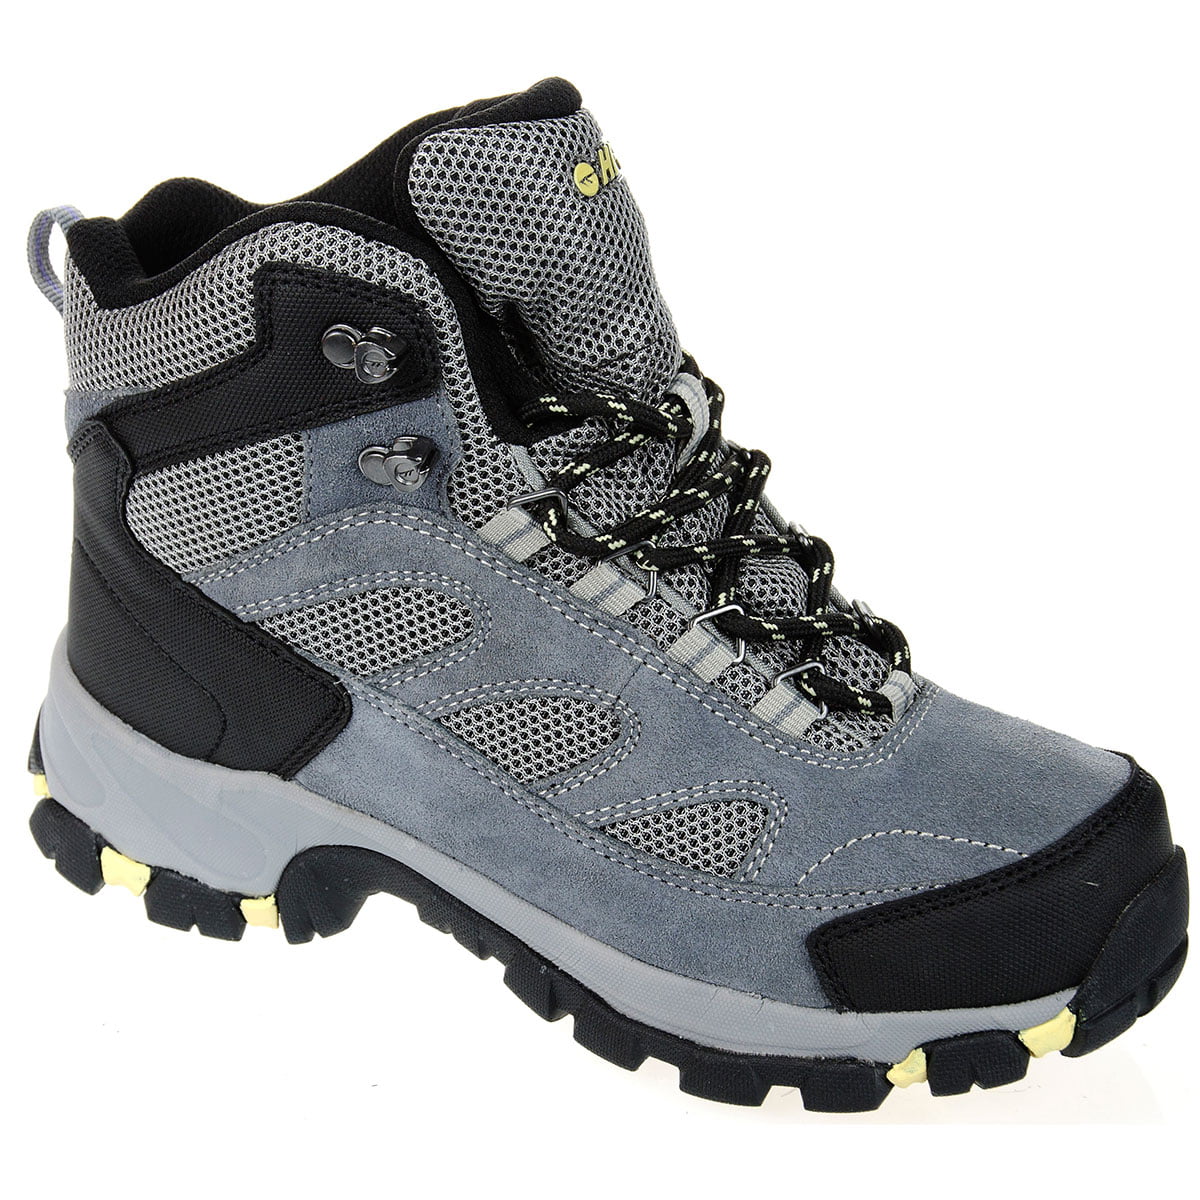 HiTec HiTec Logan Waterproof Hiking Boots for Women, Cool Gray/Lilac